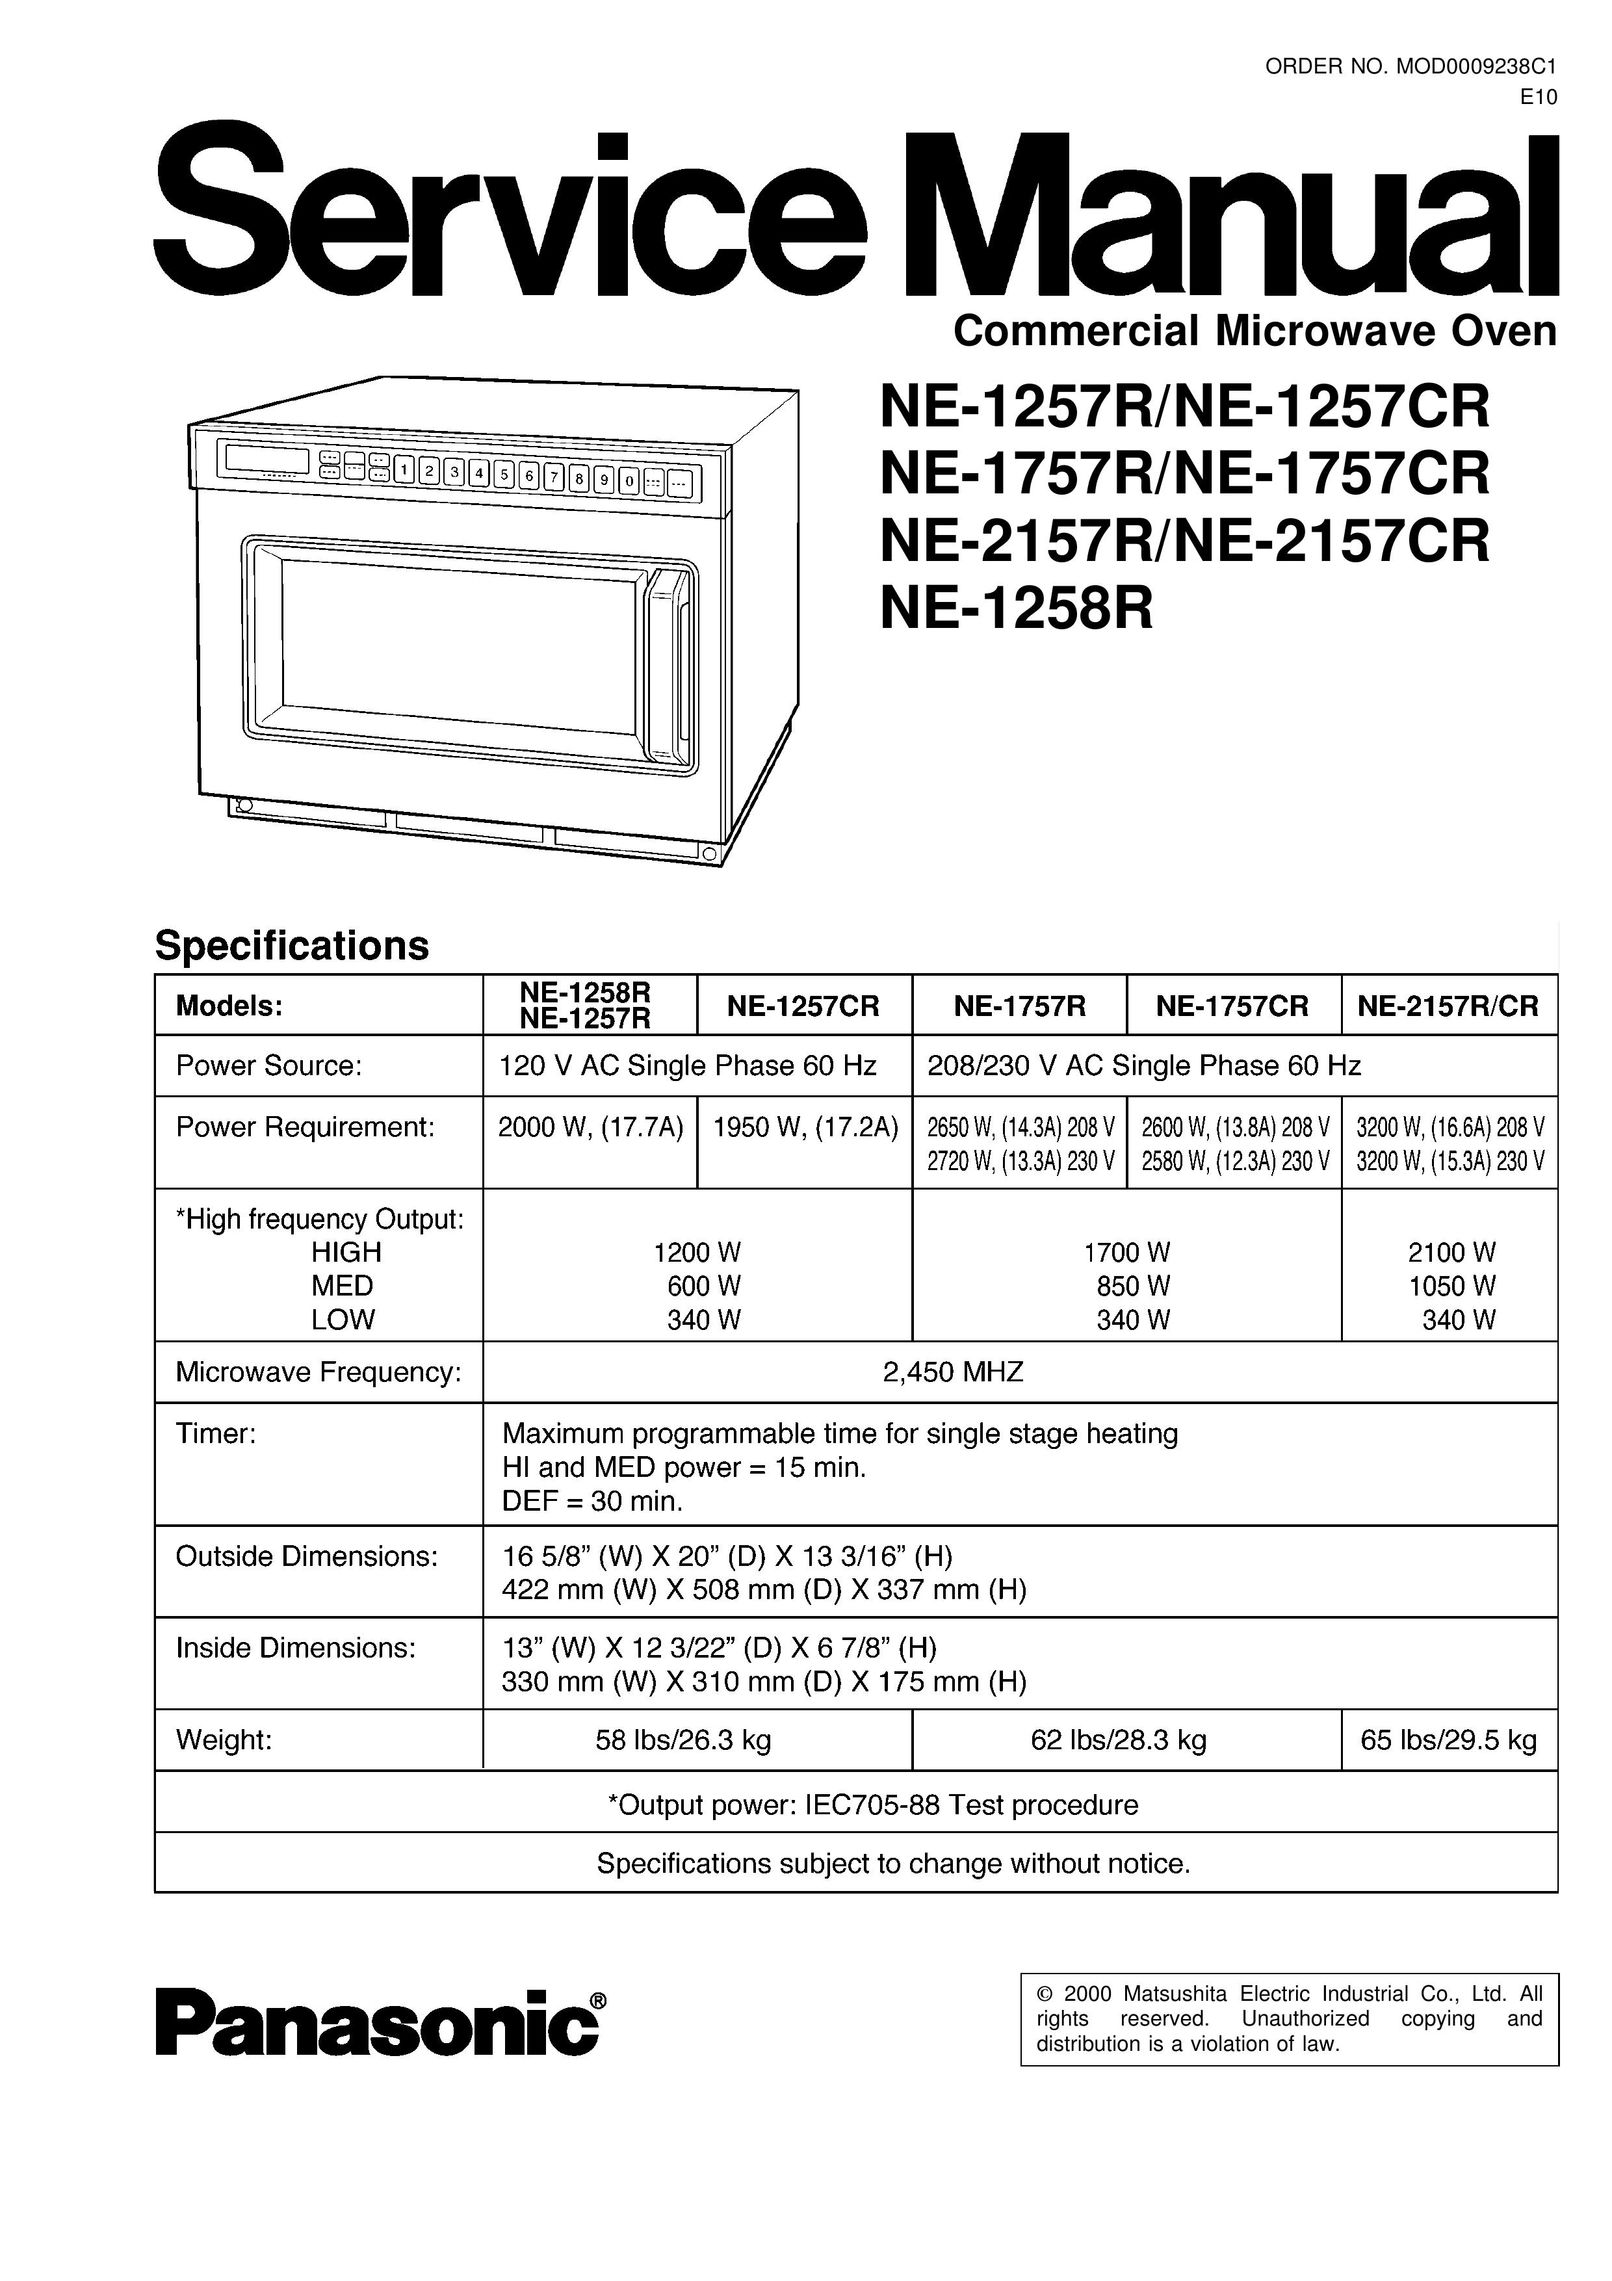 Panasonic NE-1257CR Microwave Oven User Manual